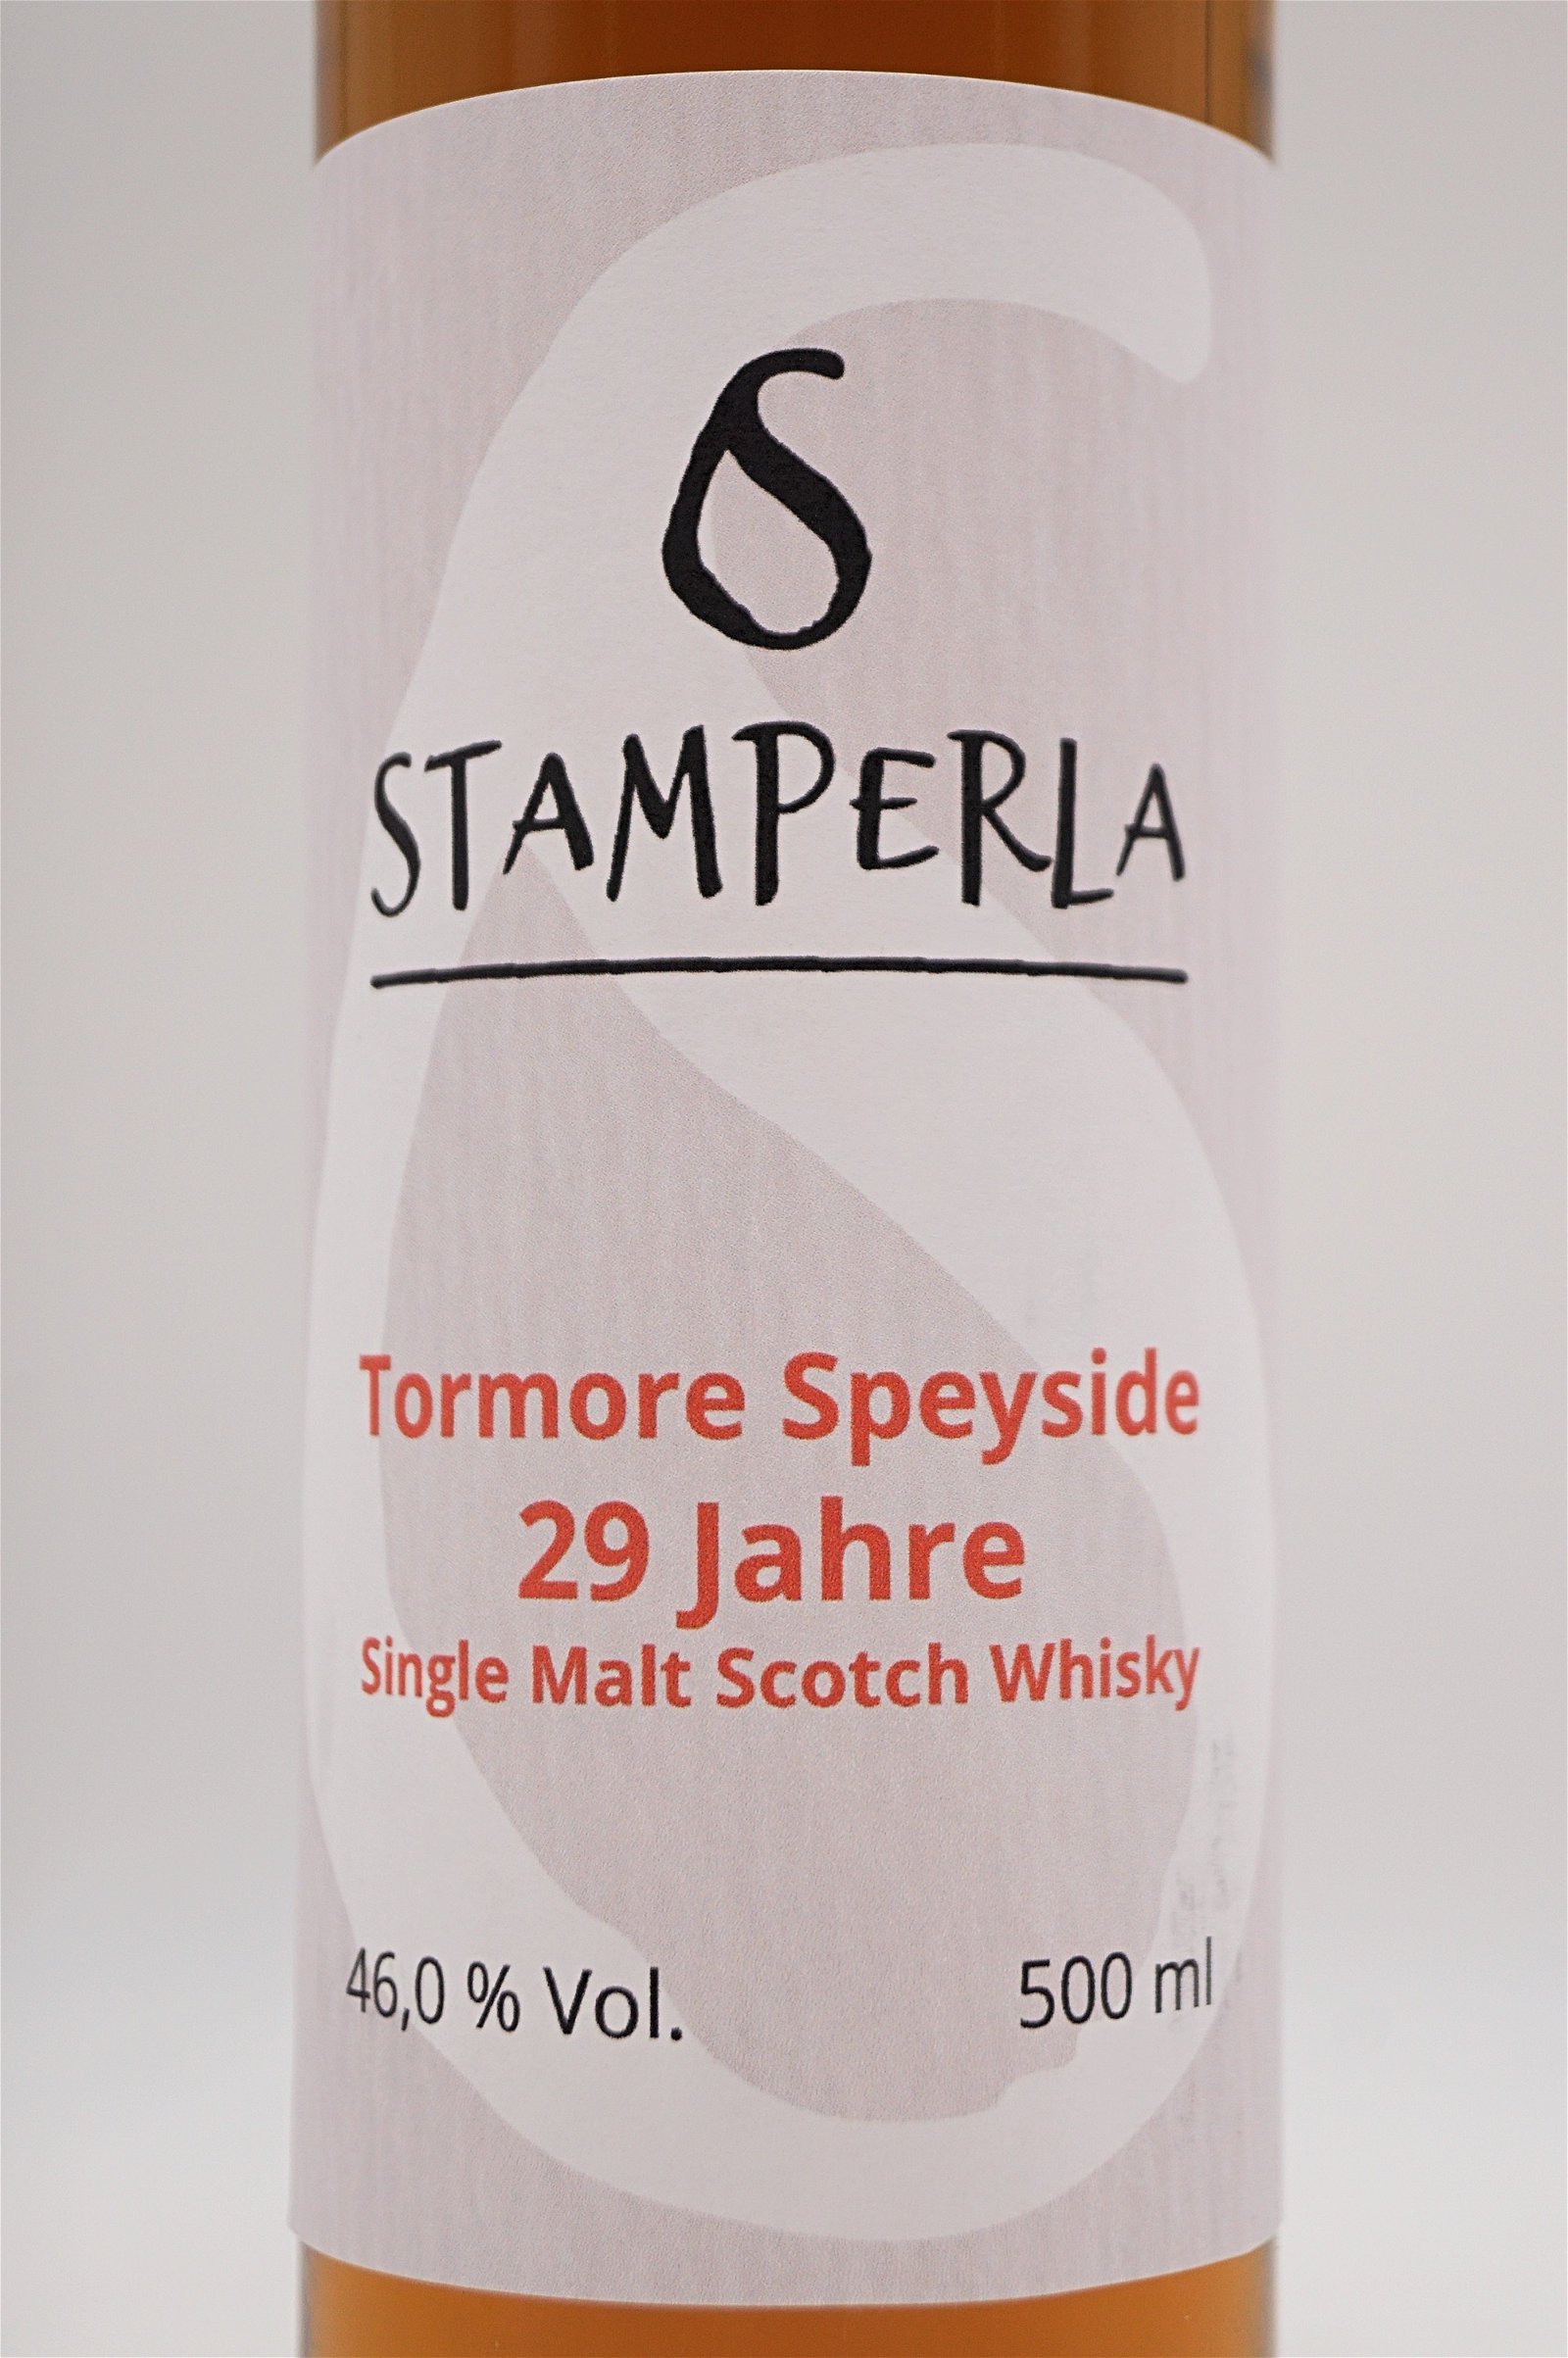 Stamperla-29 Jahre Tormore Speyside Single Malt Scotch Whisky